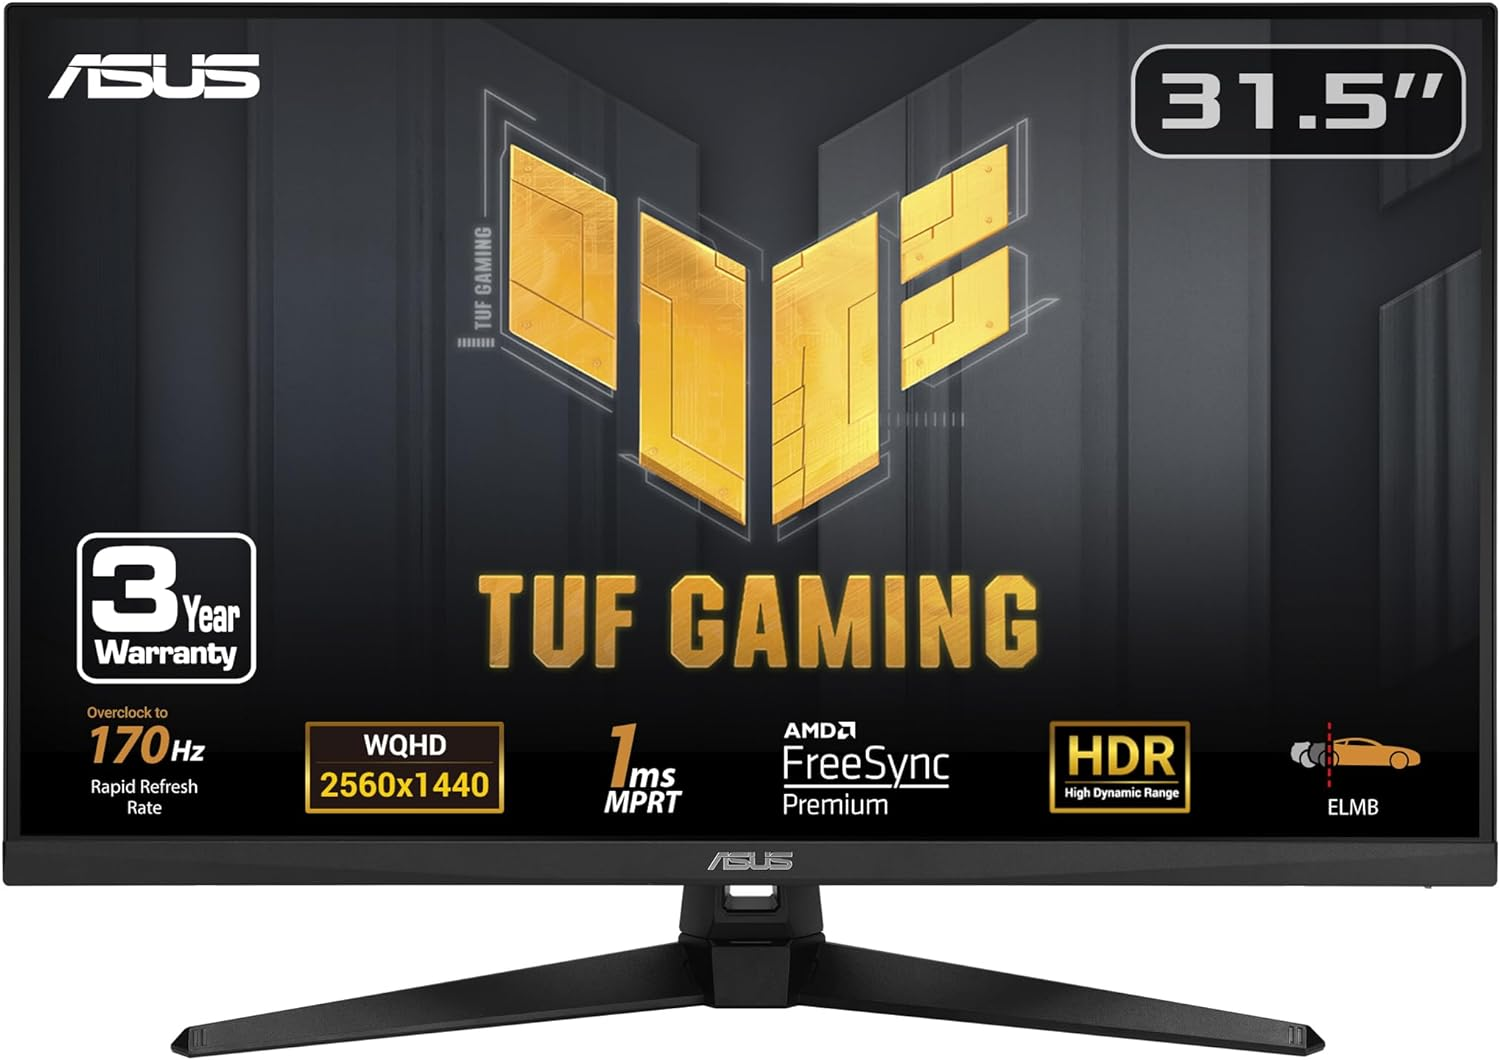 ASUS TUF Gaming 31.5” 1440P HDR Monitor (VG32AQA1A) - QHD (2560 x 1440), 170Hz, 1ms, FreeSync Premium $249 $249